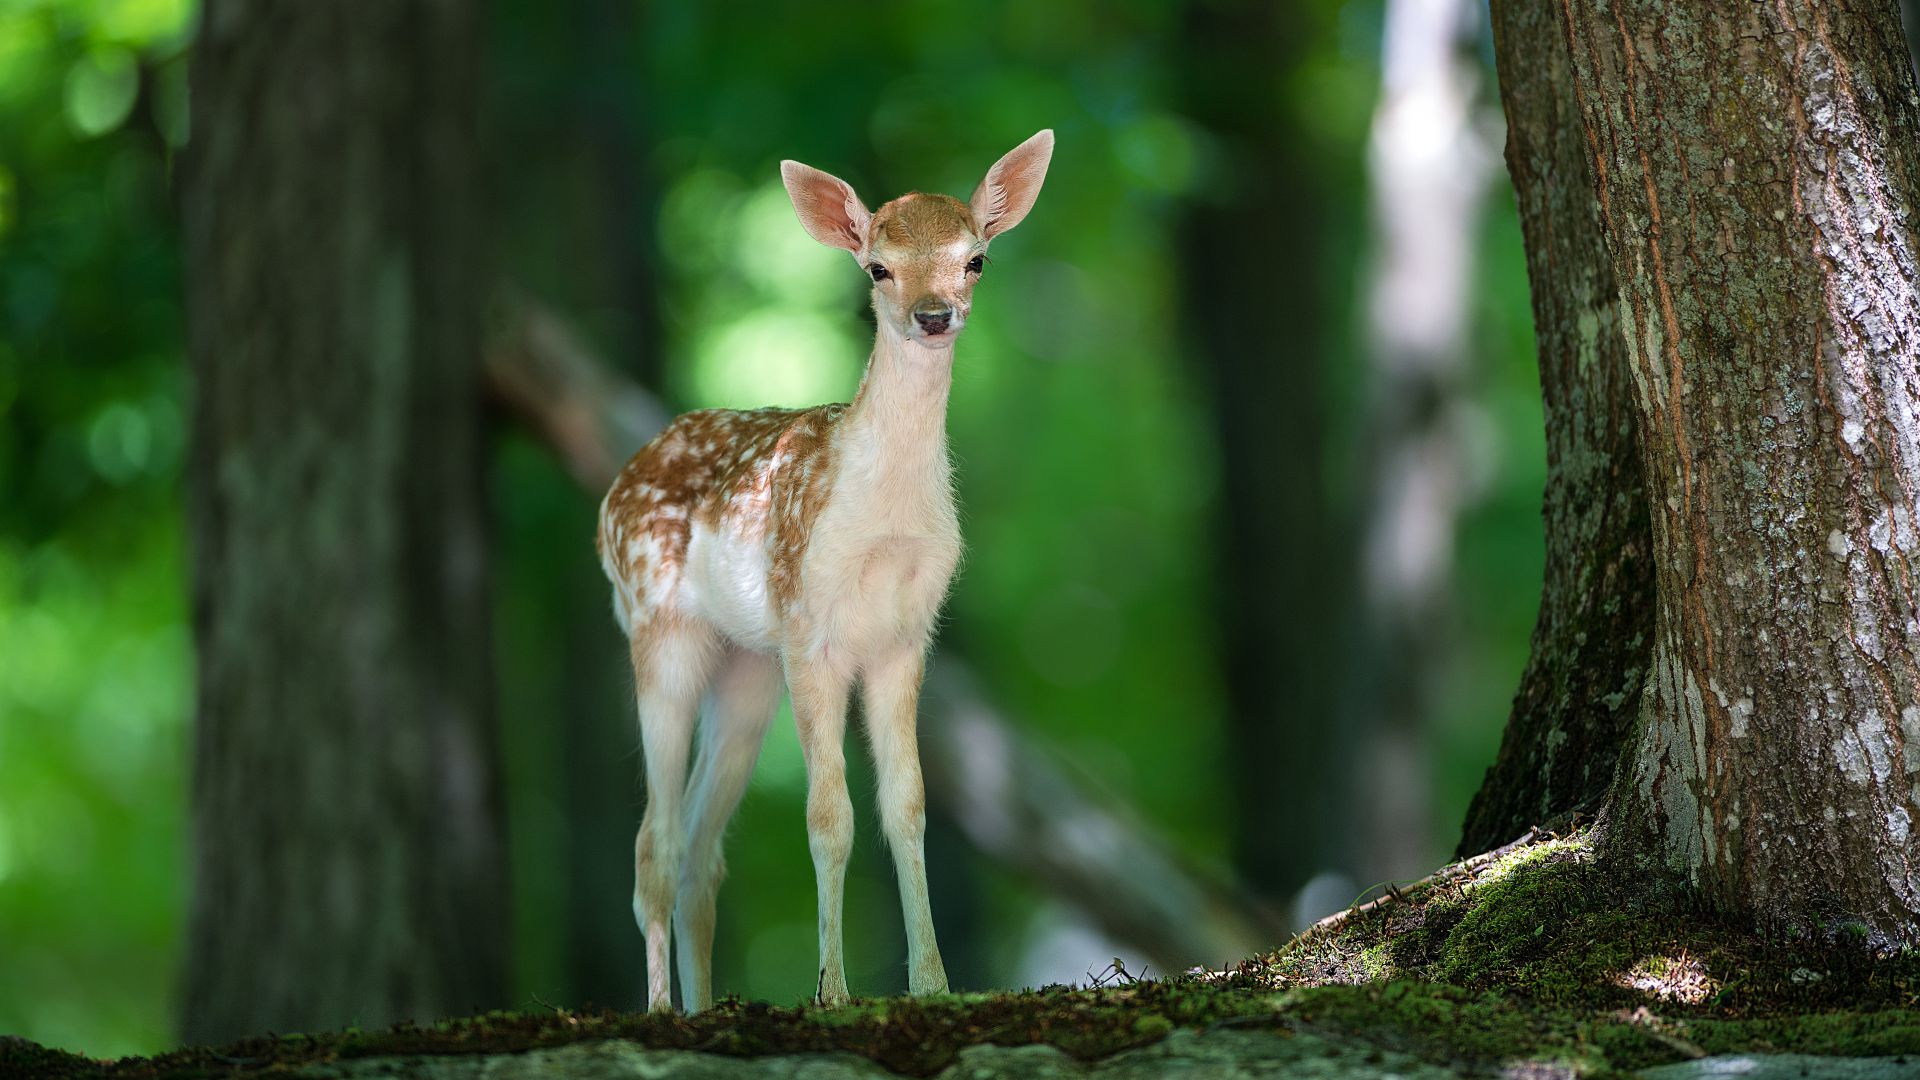 Deer Wallpaper, Animals / Wild: Deer, cute animals, forest